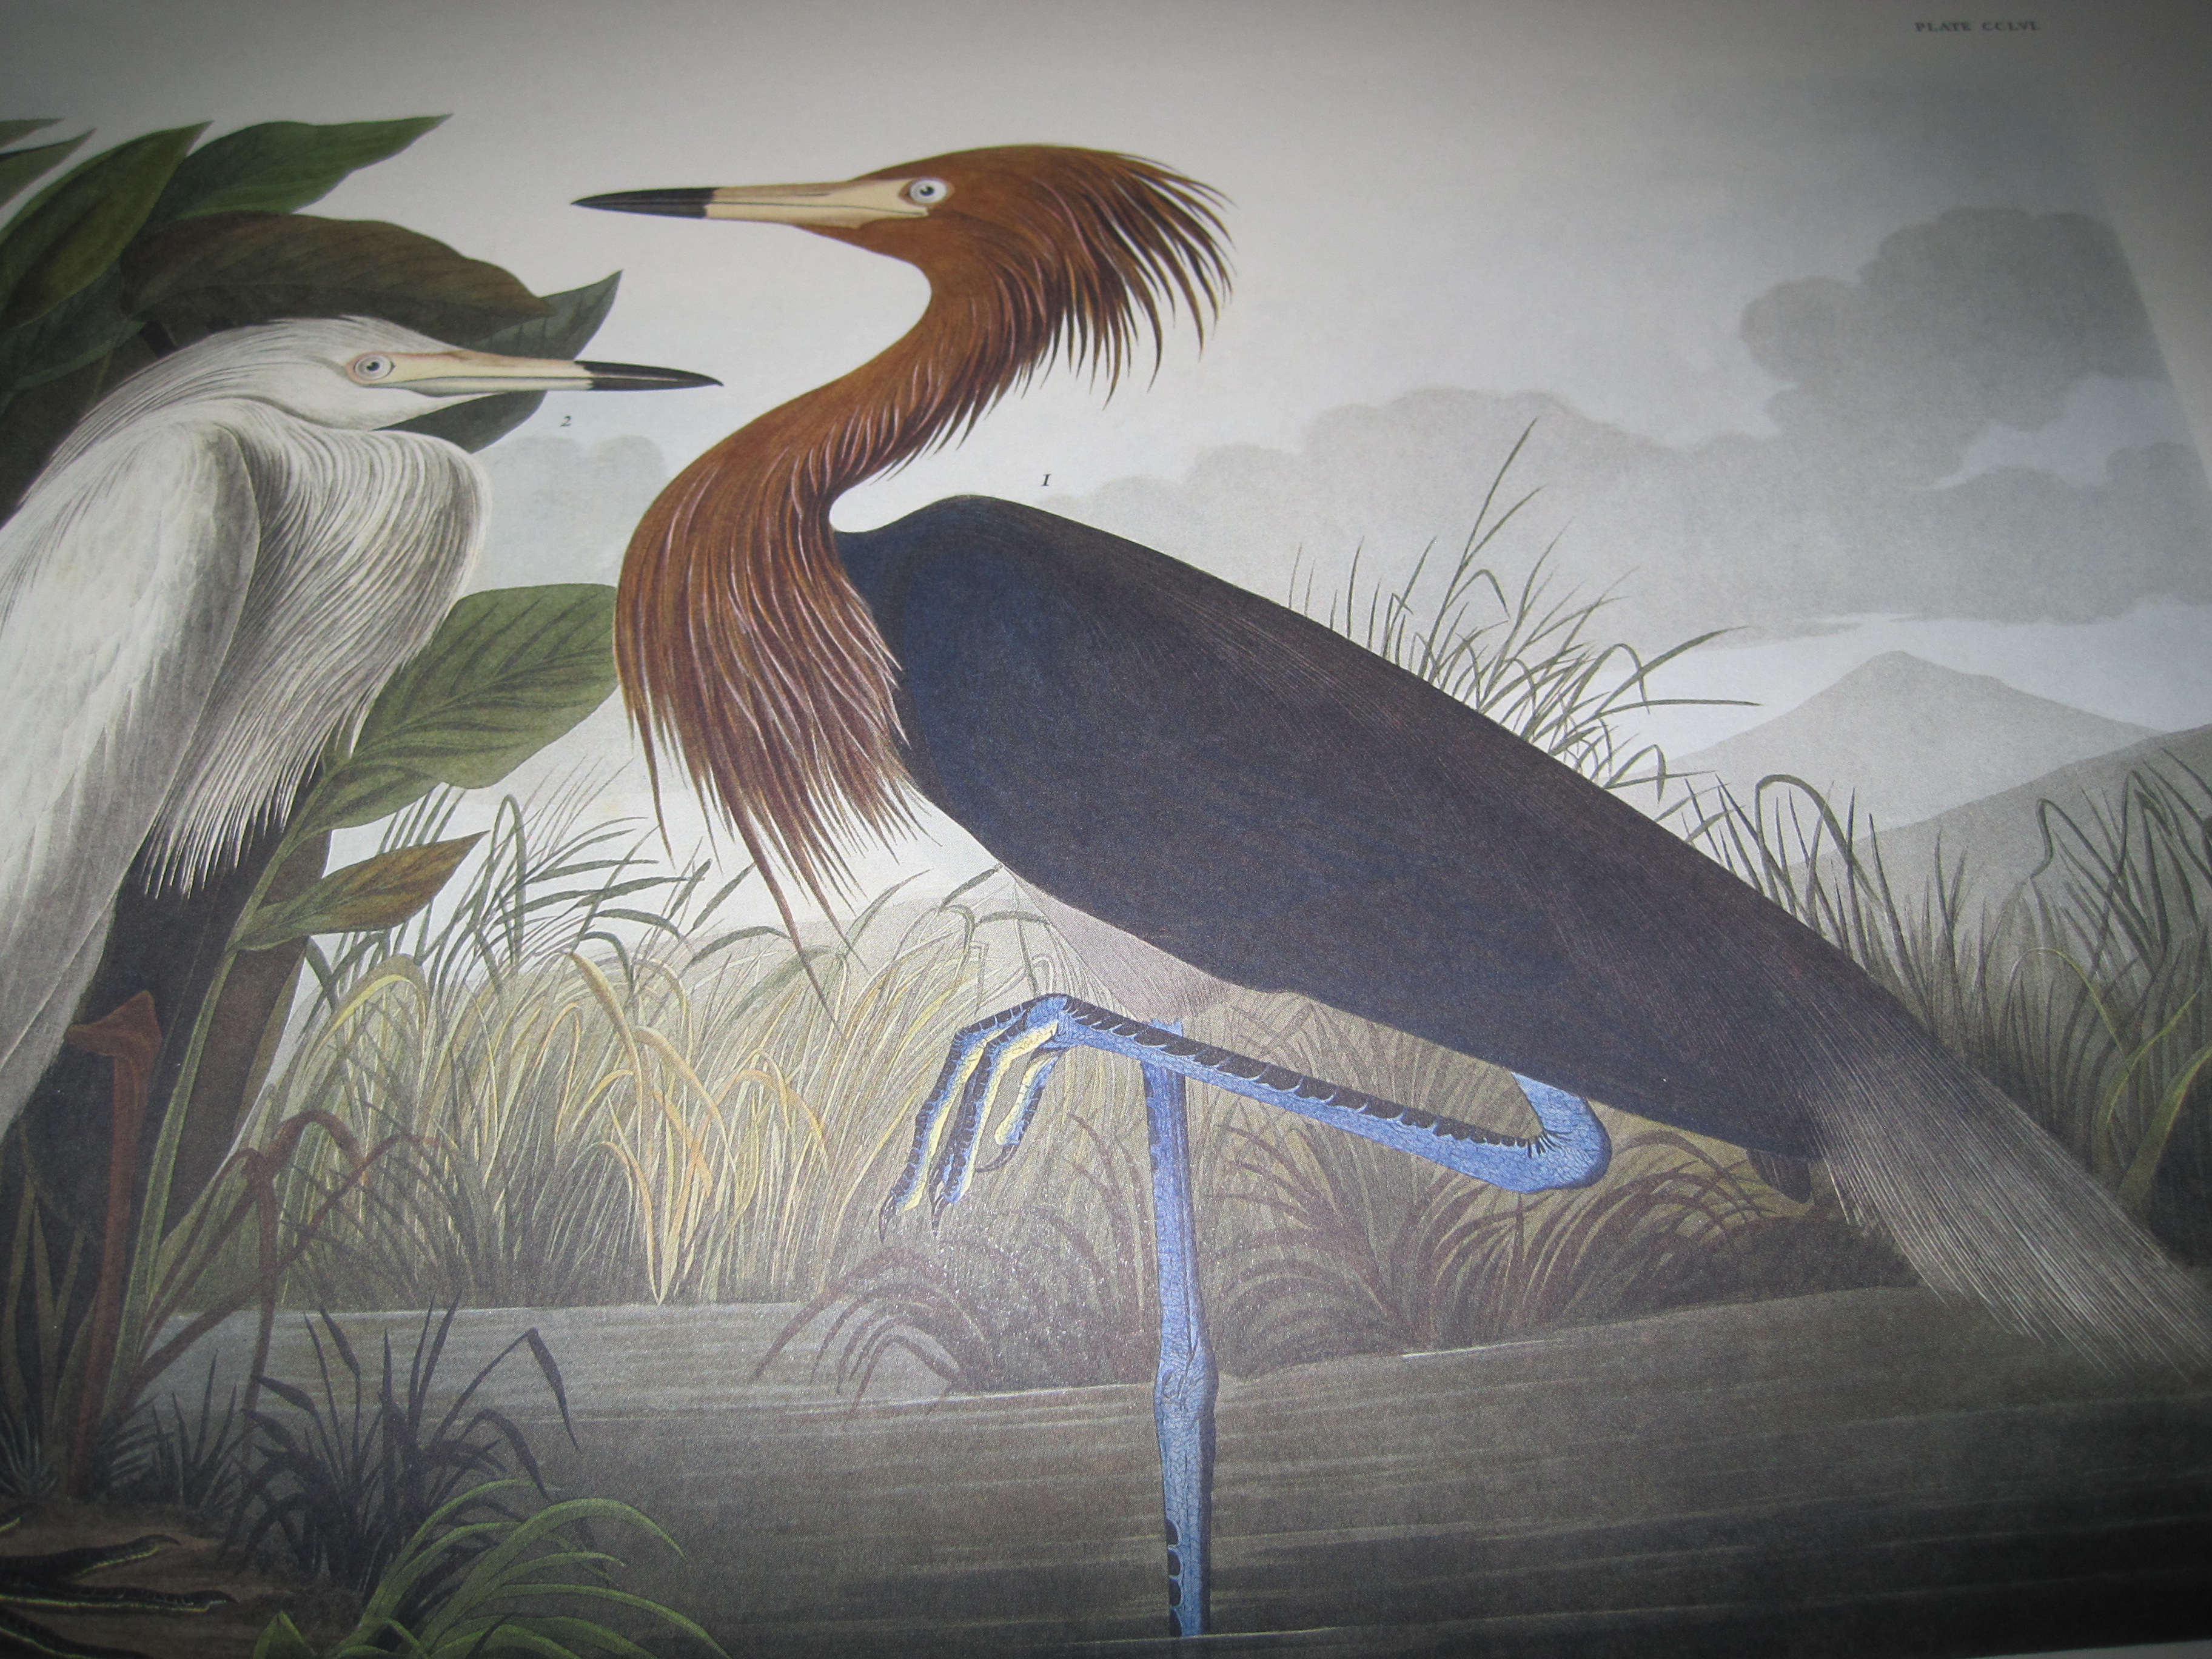 What if Audubon had kept his day job?